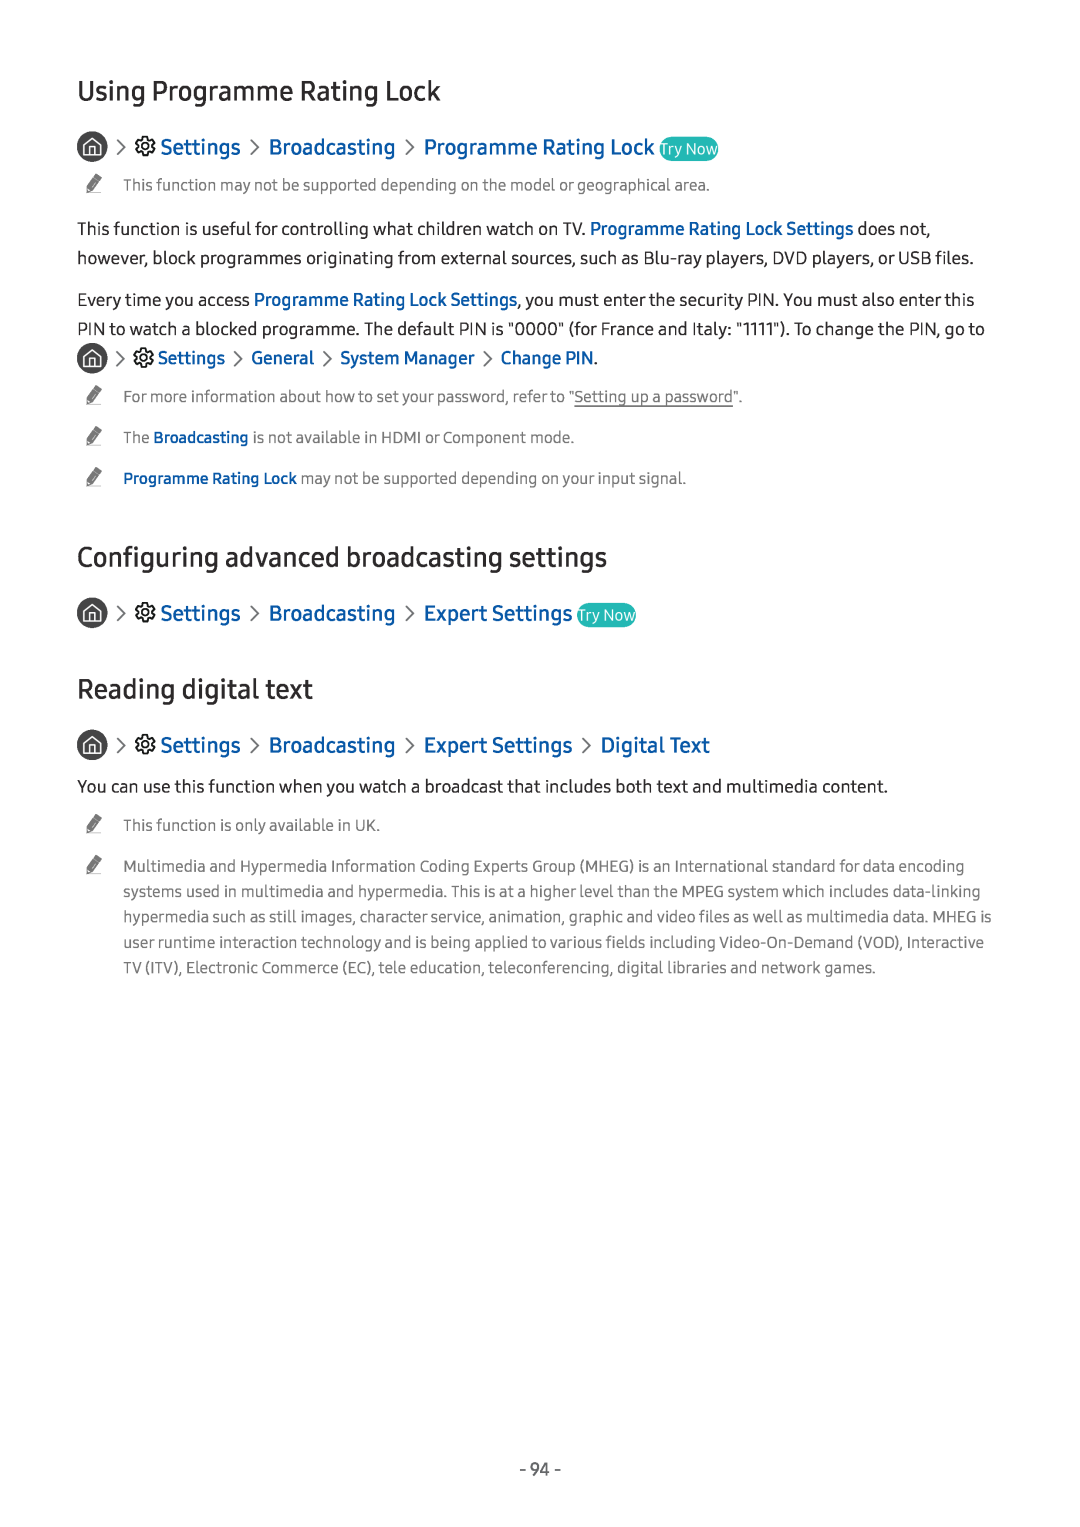 Samsung QE75Q9FNATXXH manual Using Programme Rating Lock, Configuring advanced broadcasting settings, Reading digital text 